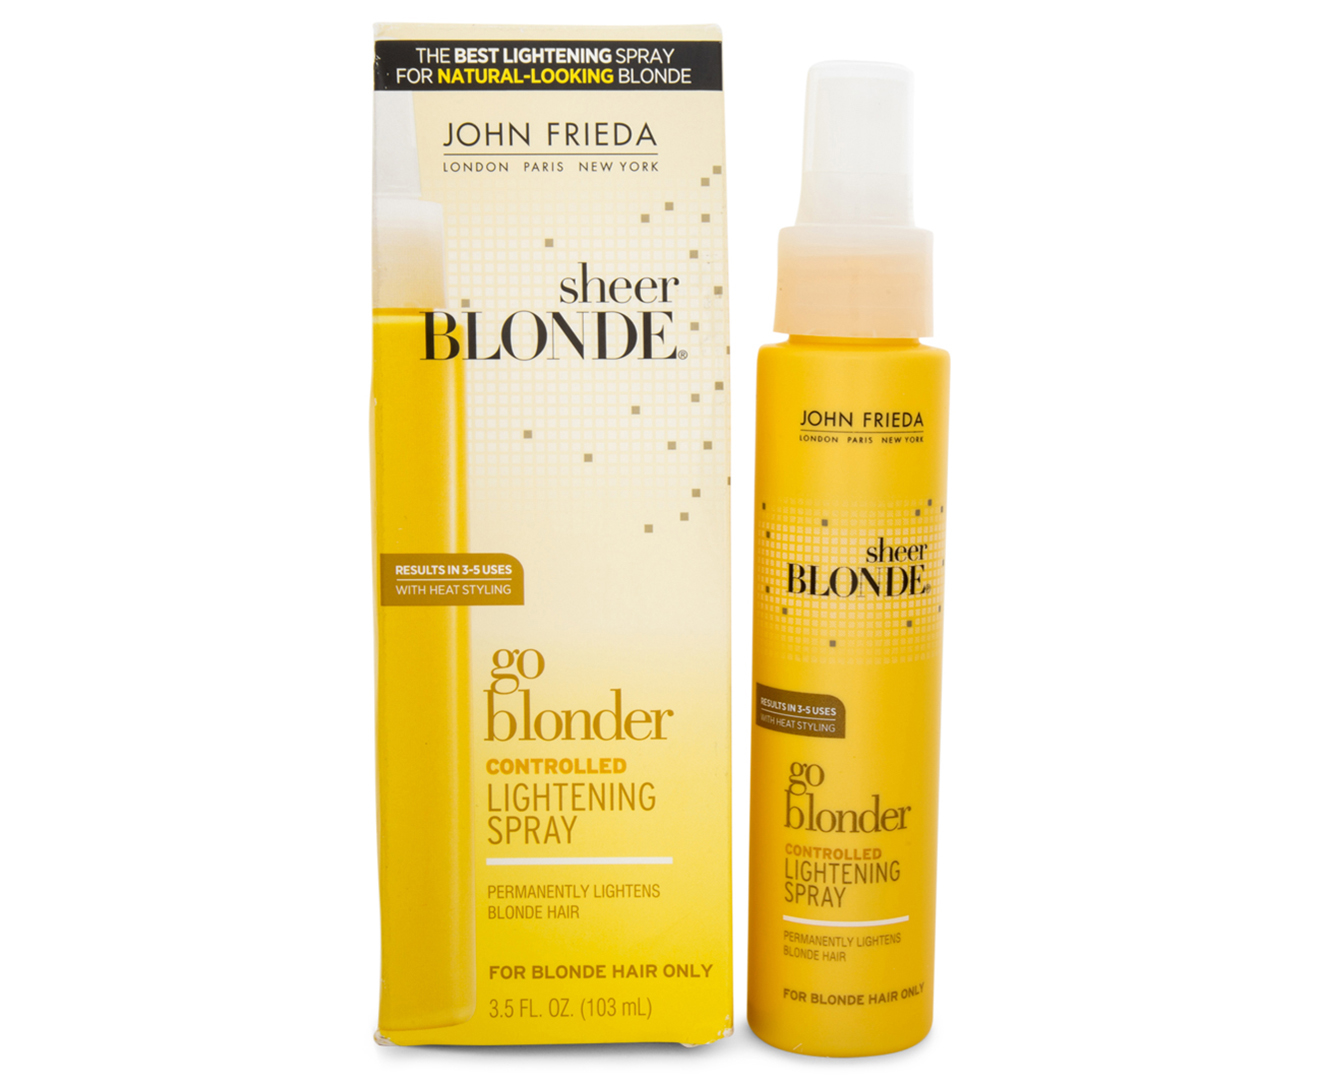 2. John Frieda Sheer Blonde Go Blonder Lightening Spray - wide 6